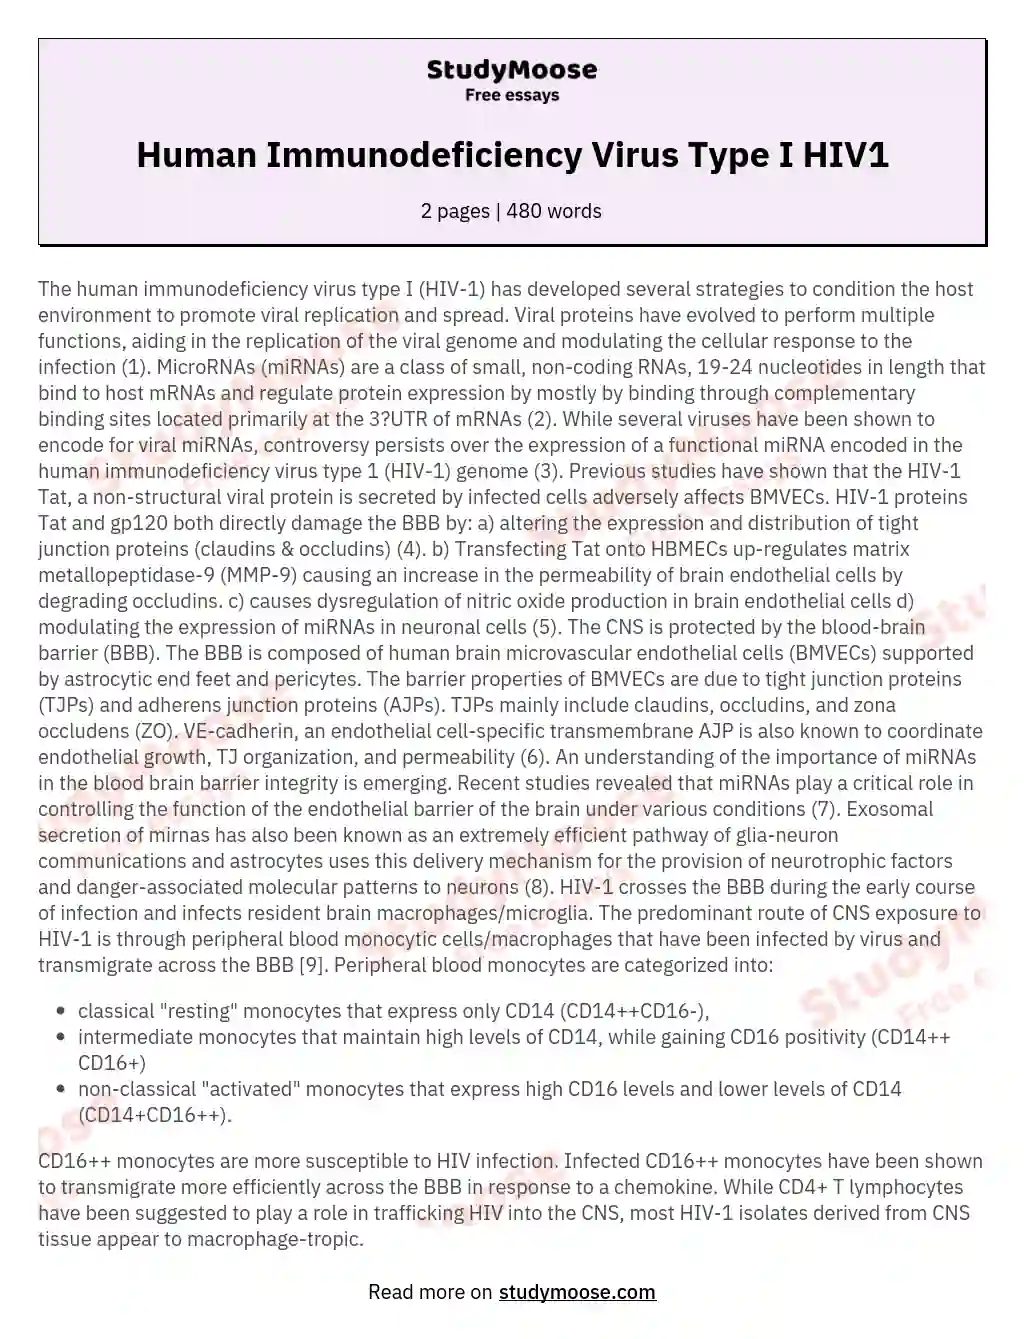 Human Immunodeficiency Virus Type I HIV1 essay